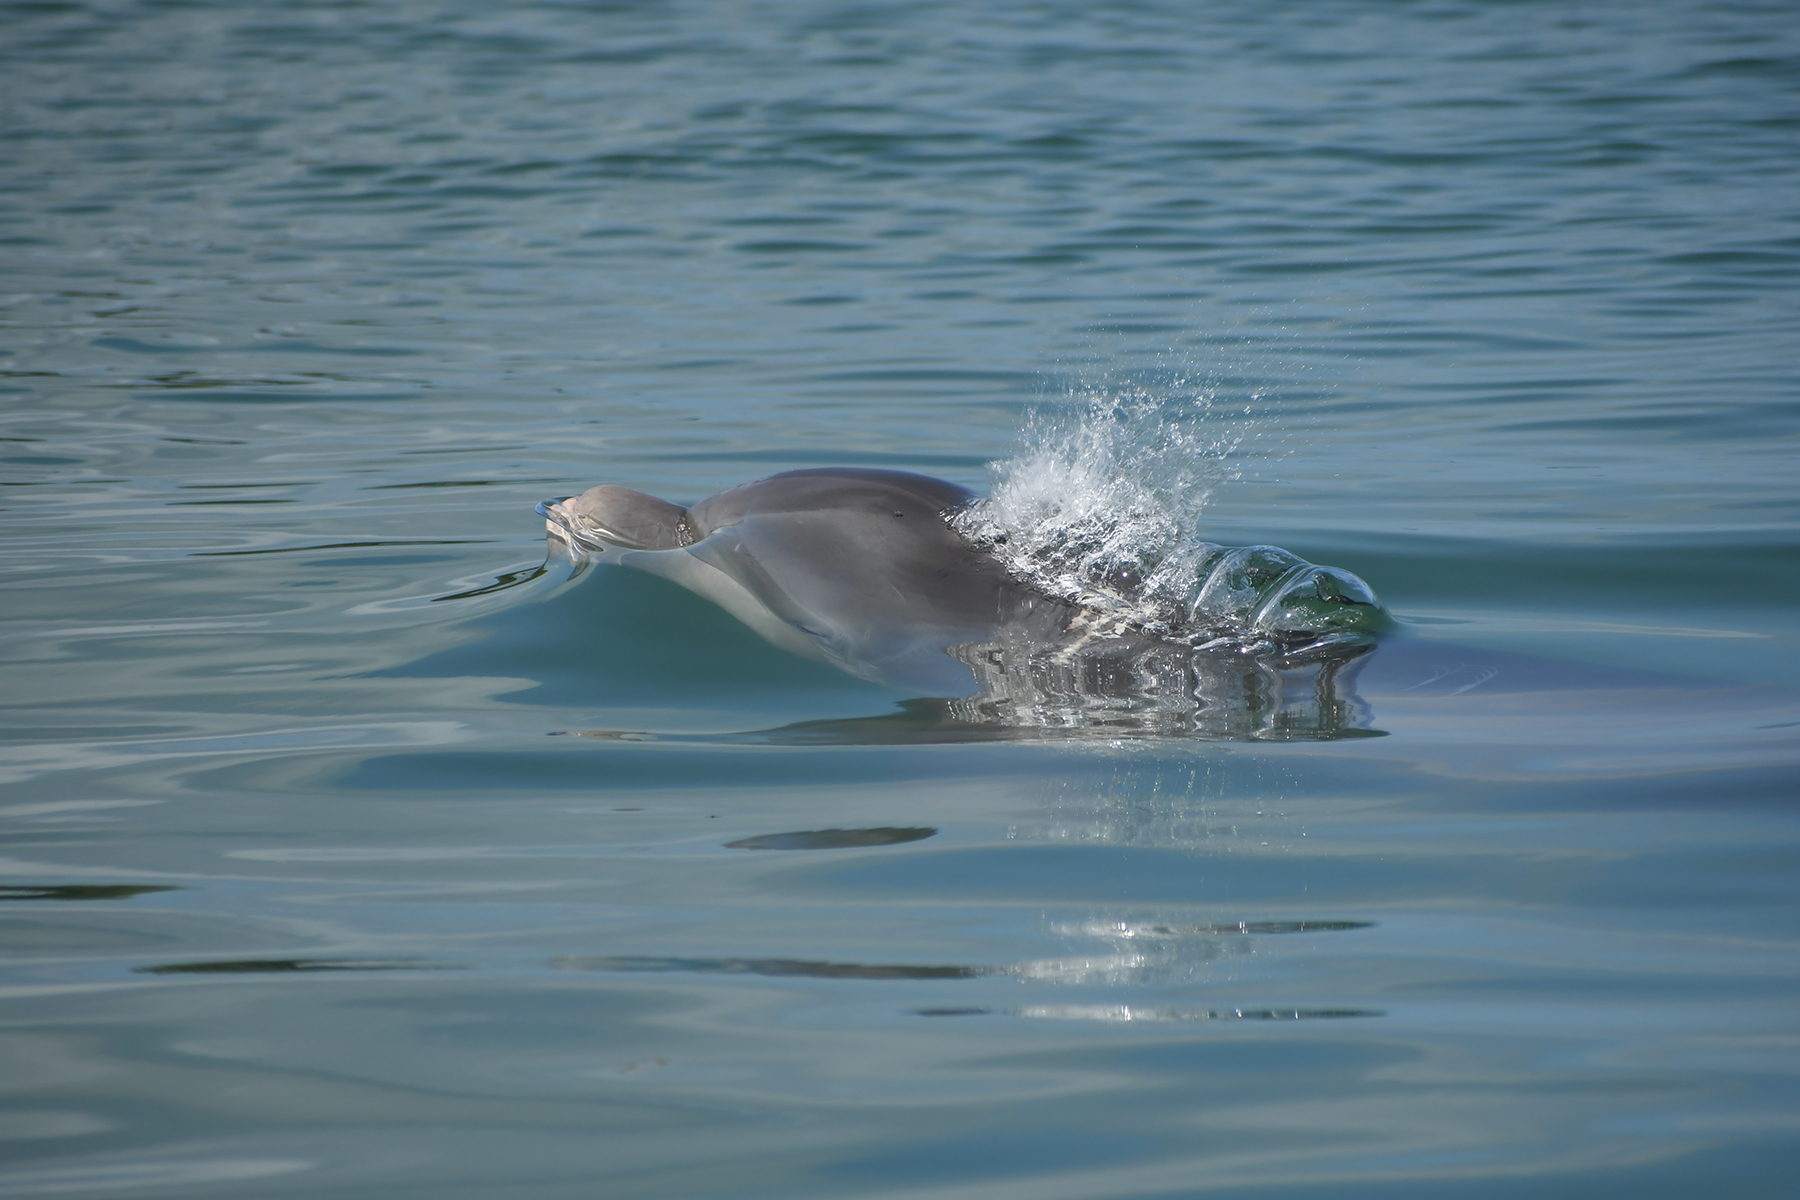 Dolphin taking a breath